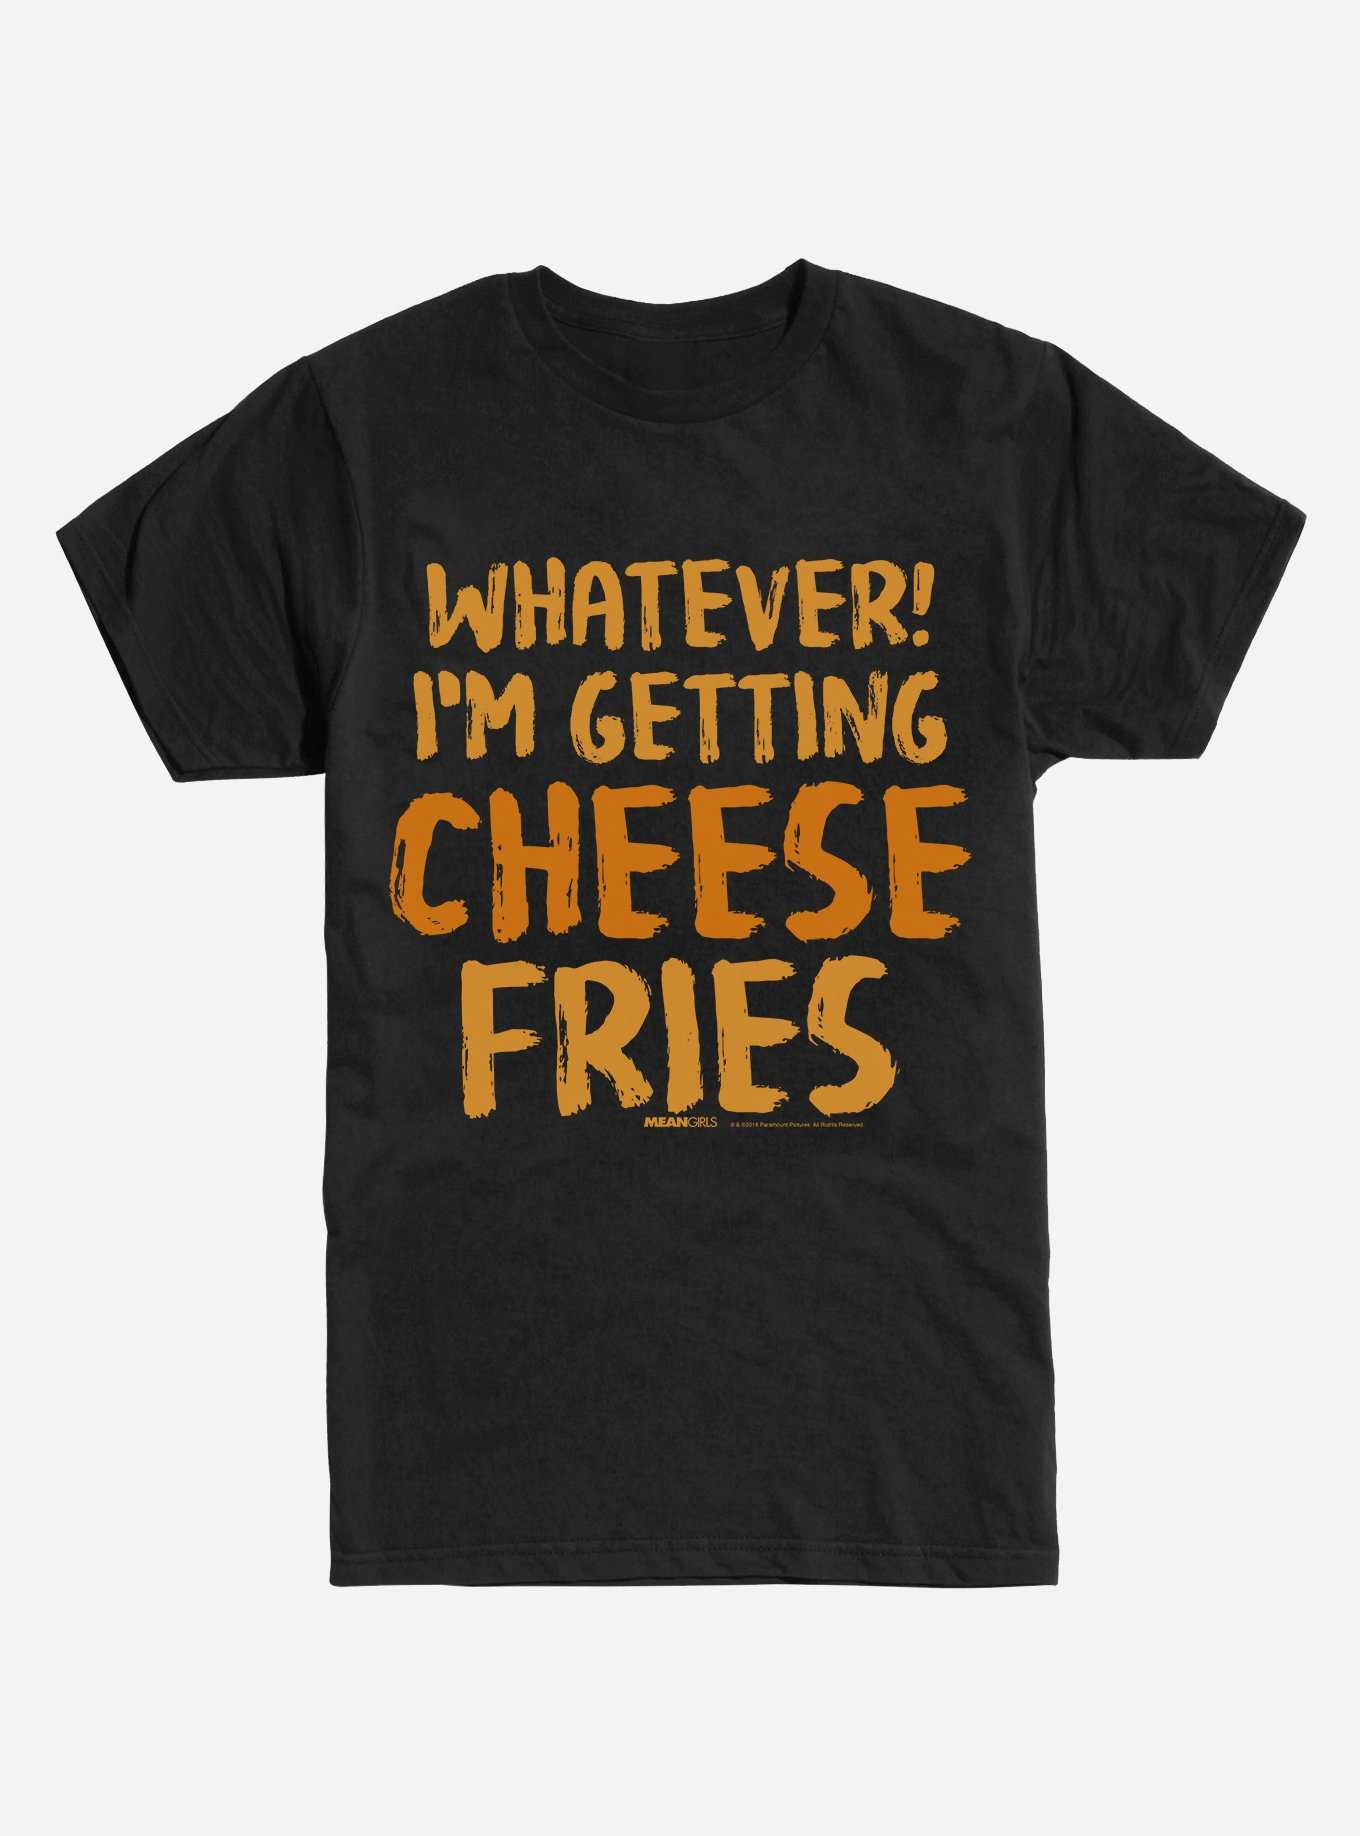 Mean Girls Cheese Fries T-Shirt, , hi-res